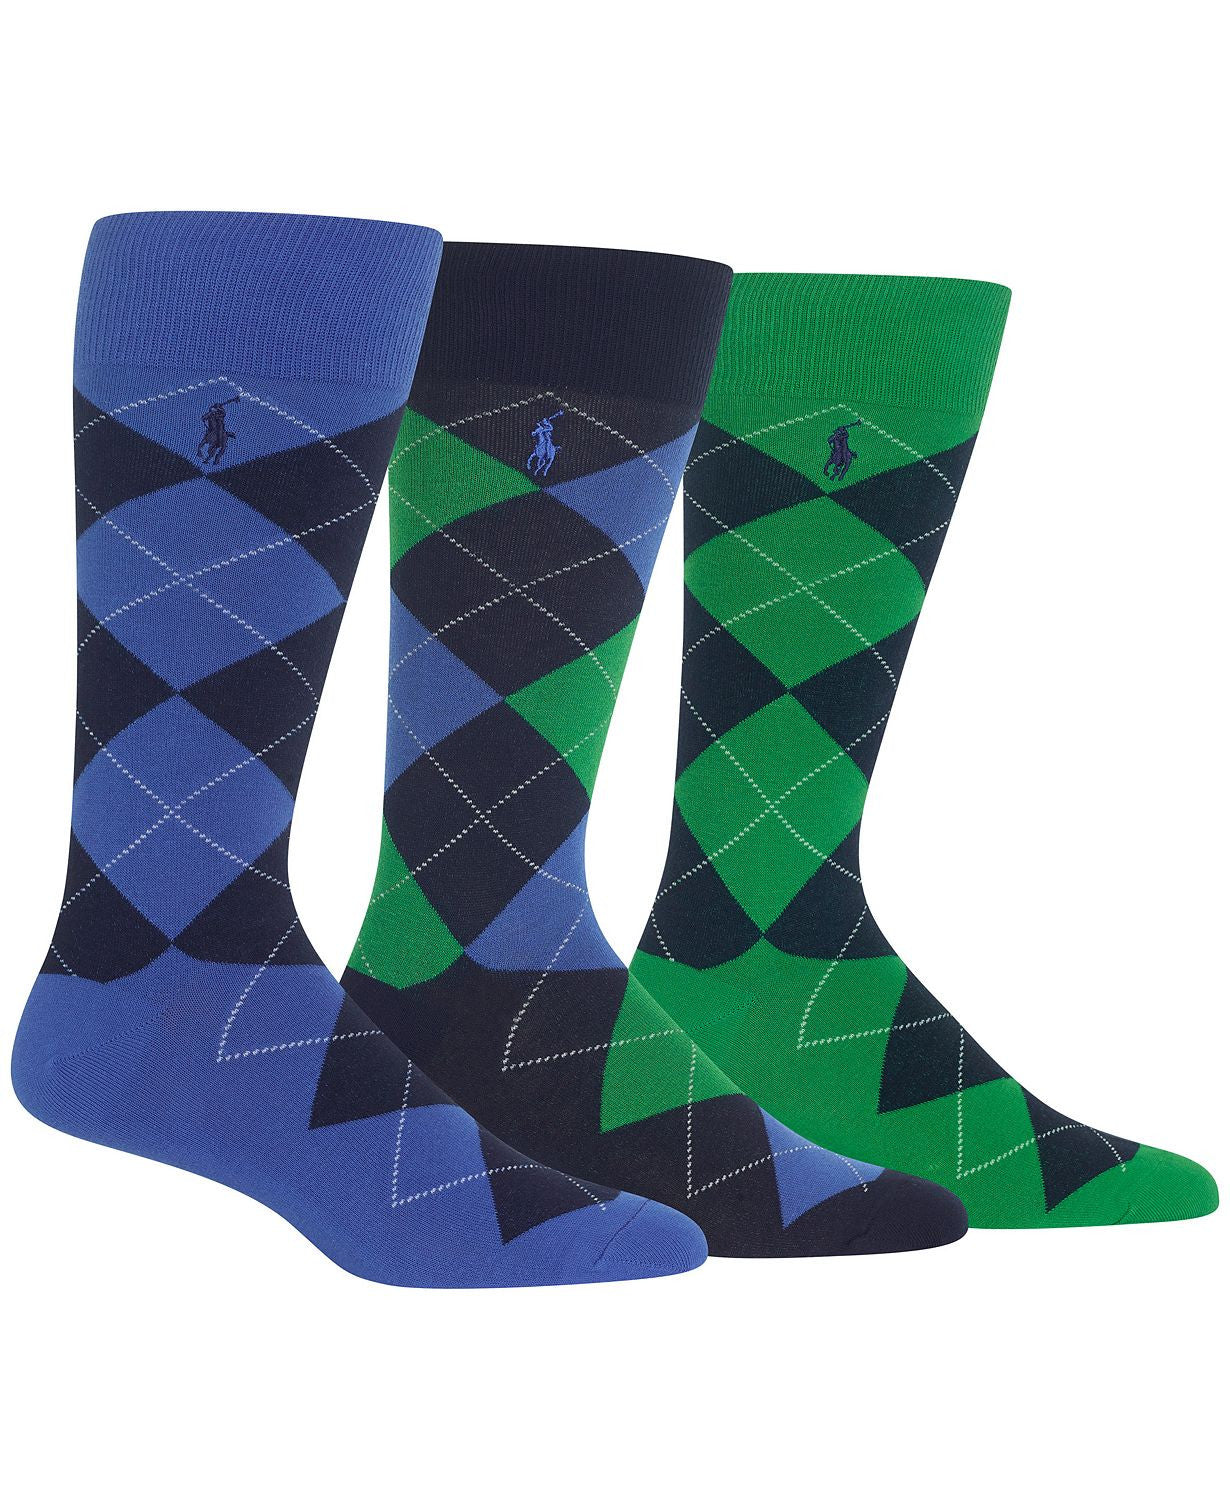 Polo Ralph Lauren Socks Dress Argyle Crew 3 Pack Blue/Green